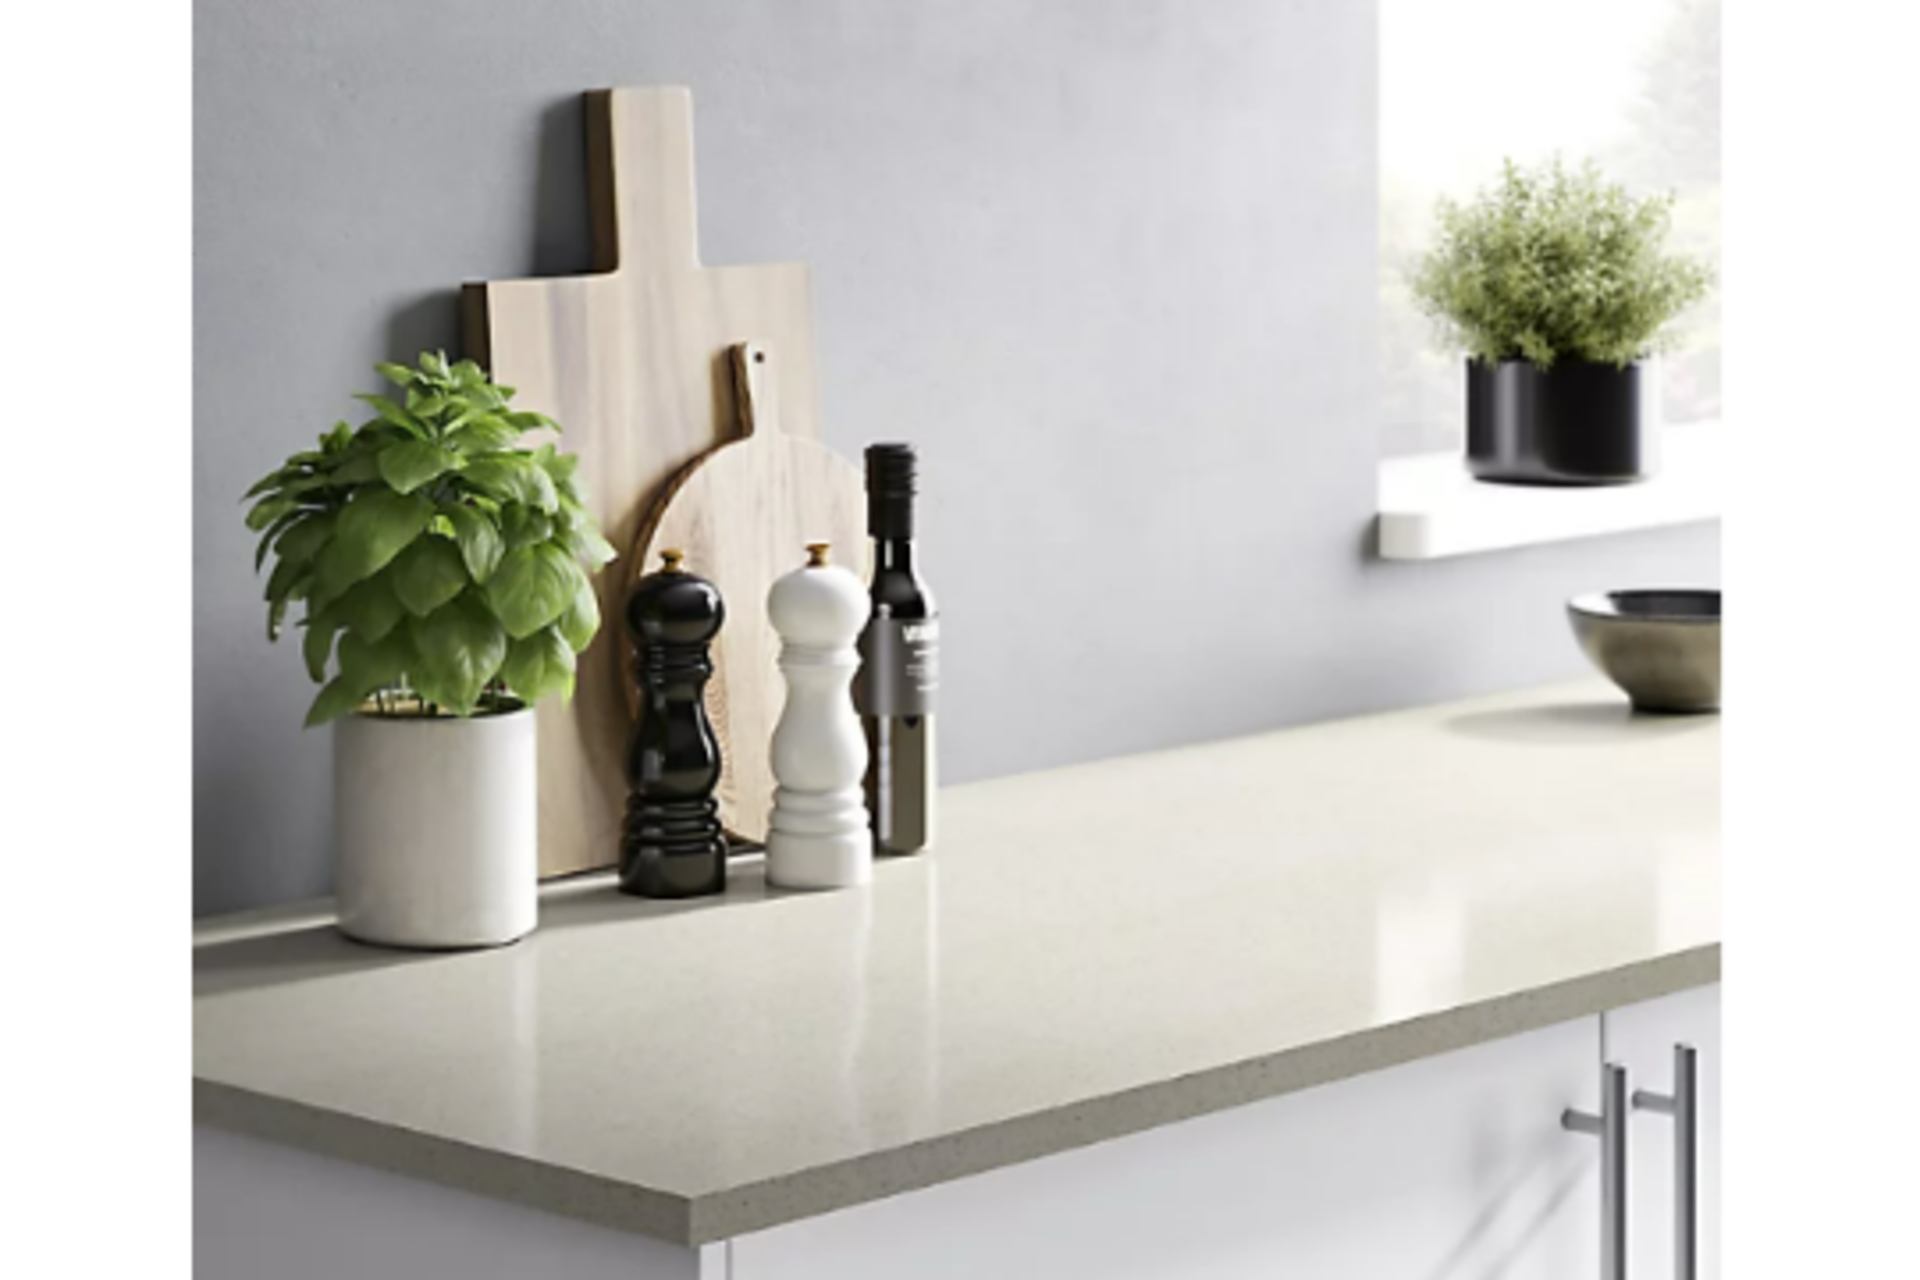 3 X New Packaged HI-MACS 20mm Matt Sand beige Stone effect Acrylic Square edge Kitchen Worktop. - Image 3 of 4